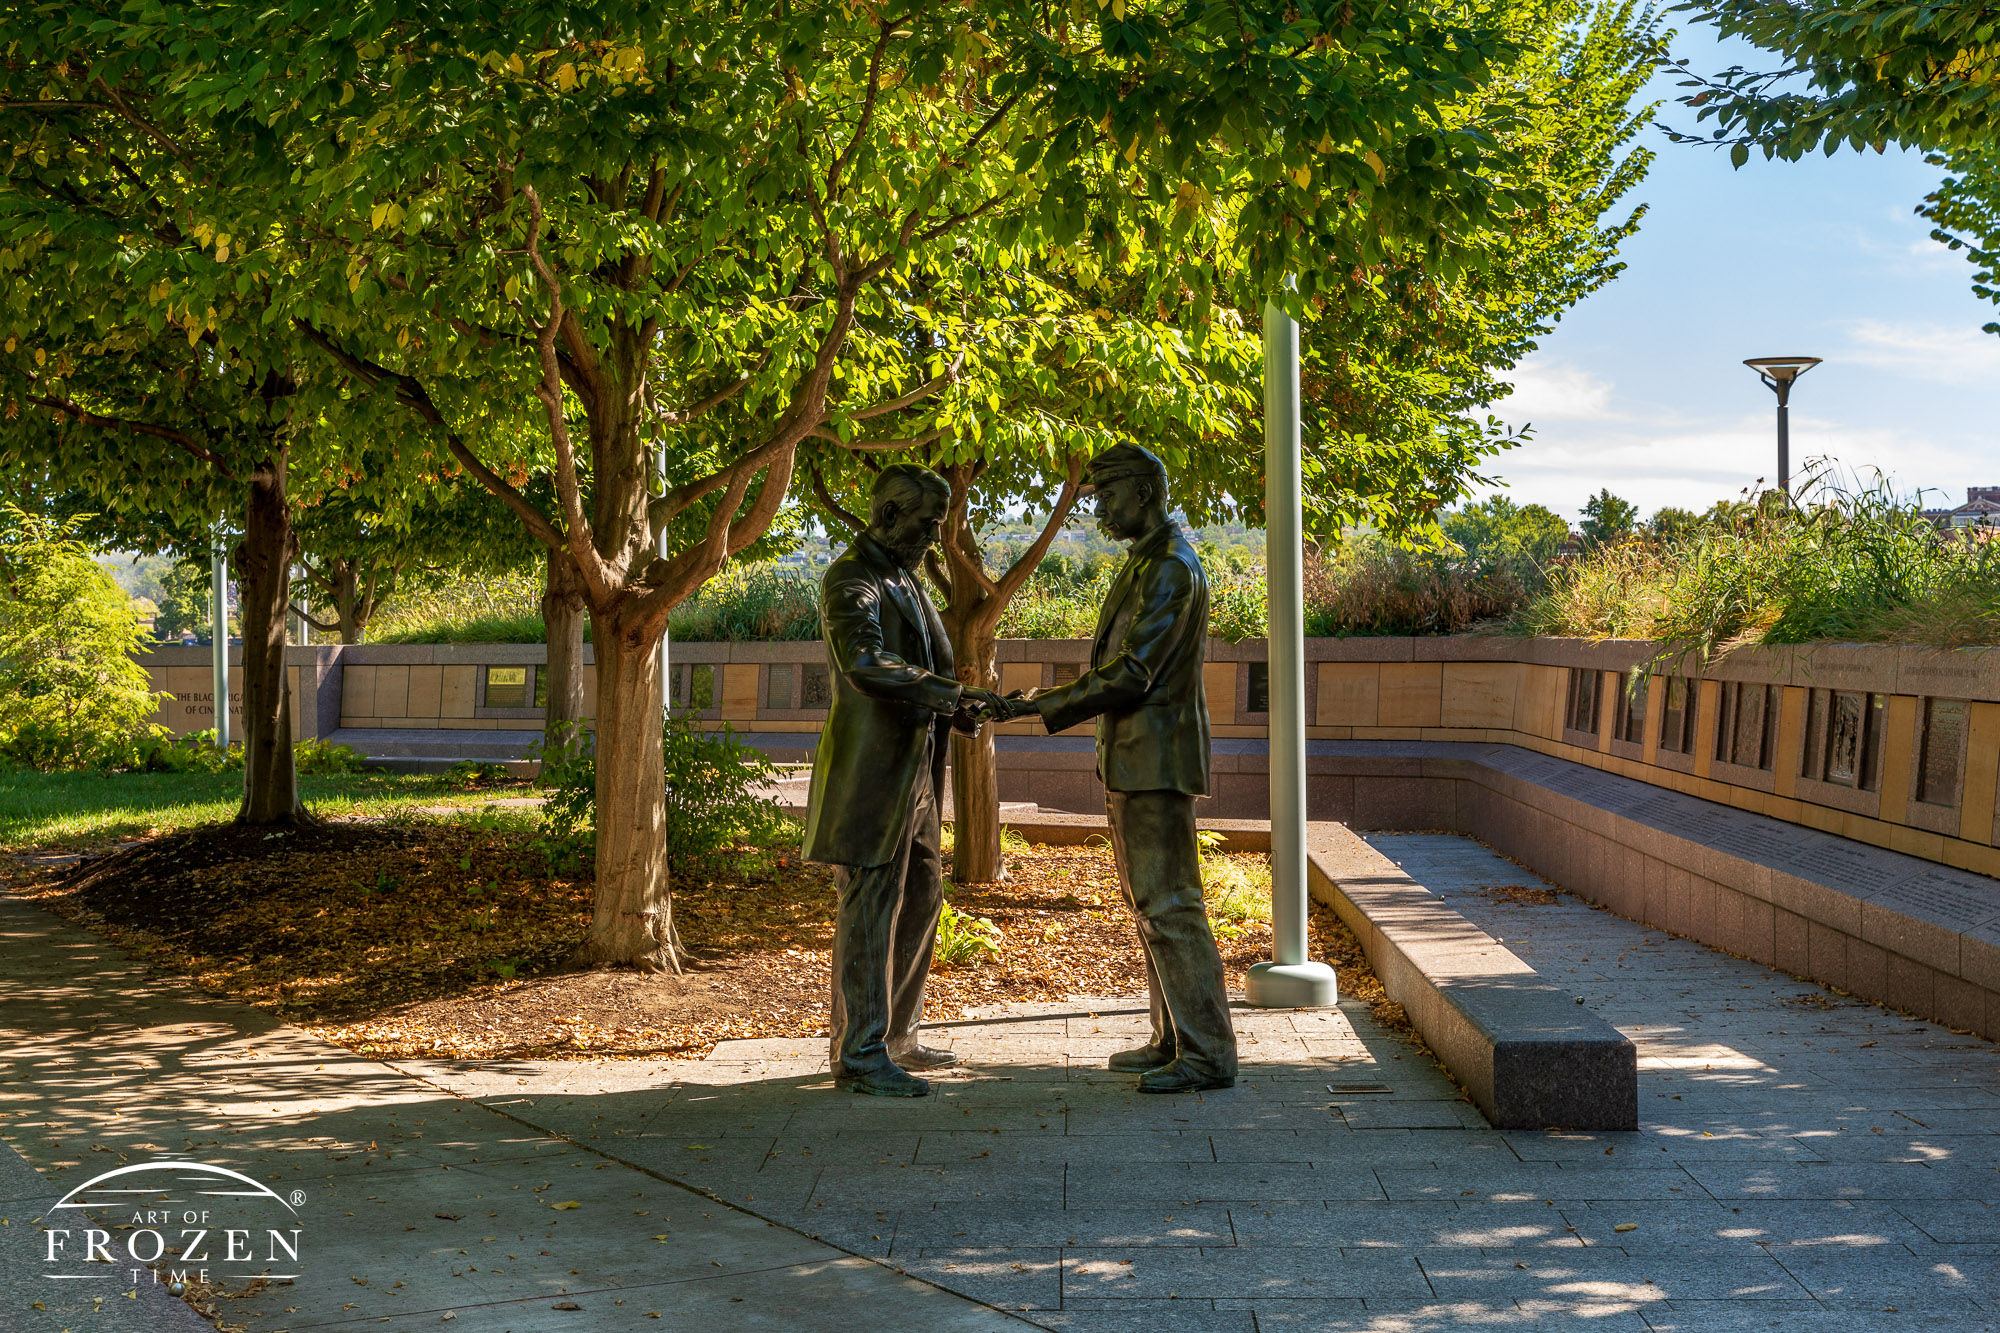 A sculpture memorializing the disbandment of the Black Brigade following a successful Civil War defense of Cincinnati